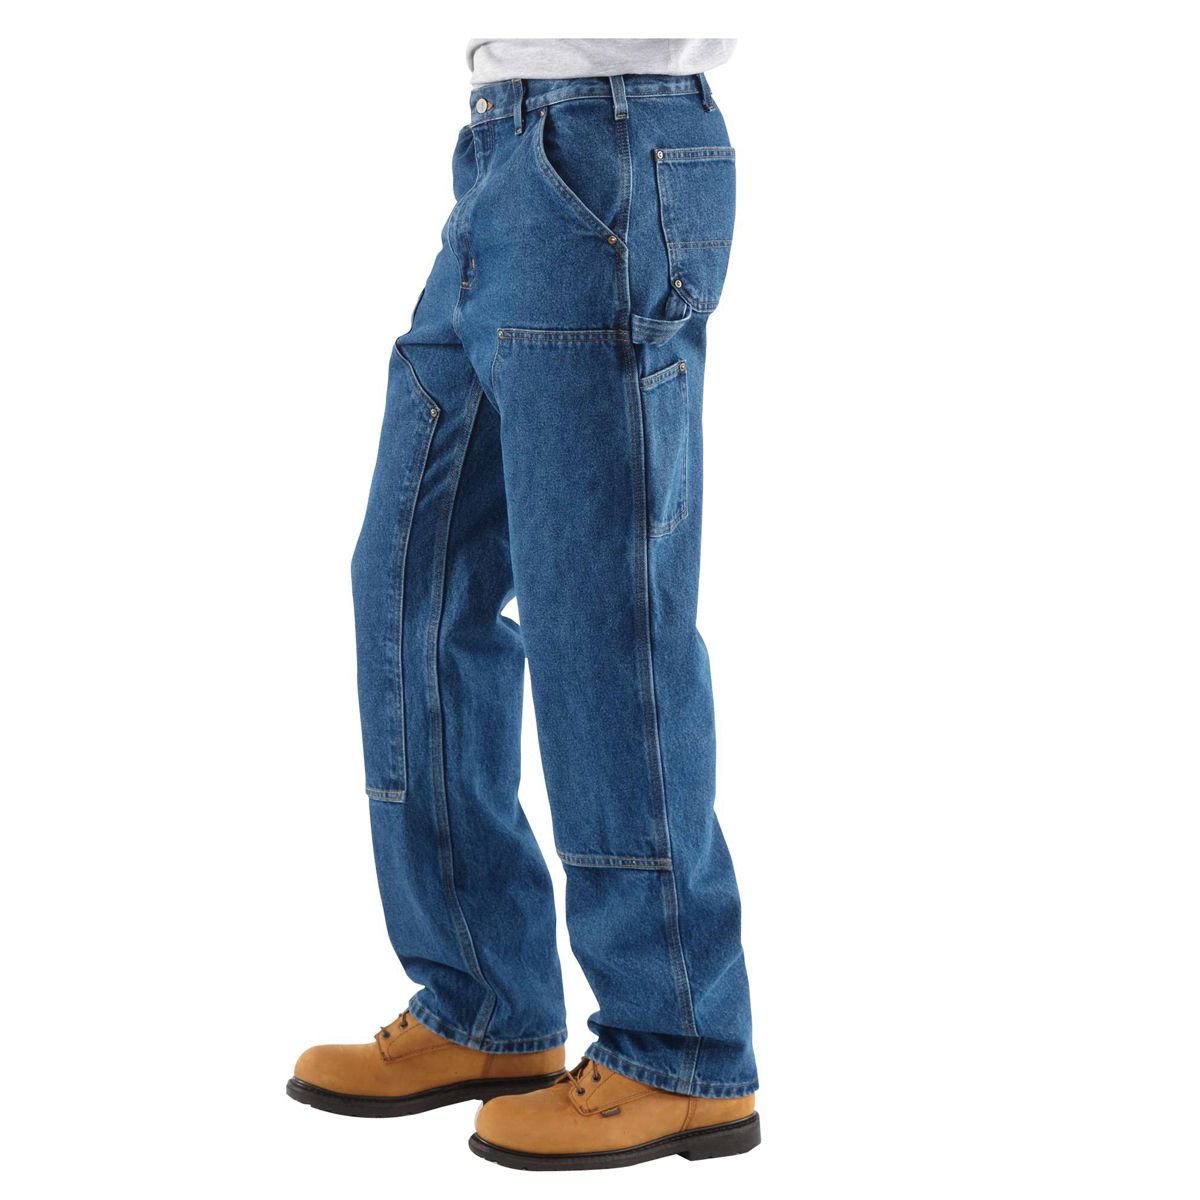 Carhartt B73-DST-33X30 Utility Logger Jeans, 33 in Waist, 30 in L Inseam, Darkstone, Loose Fit - 8